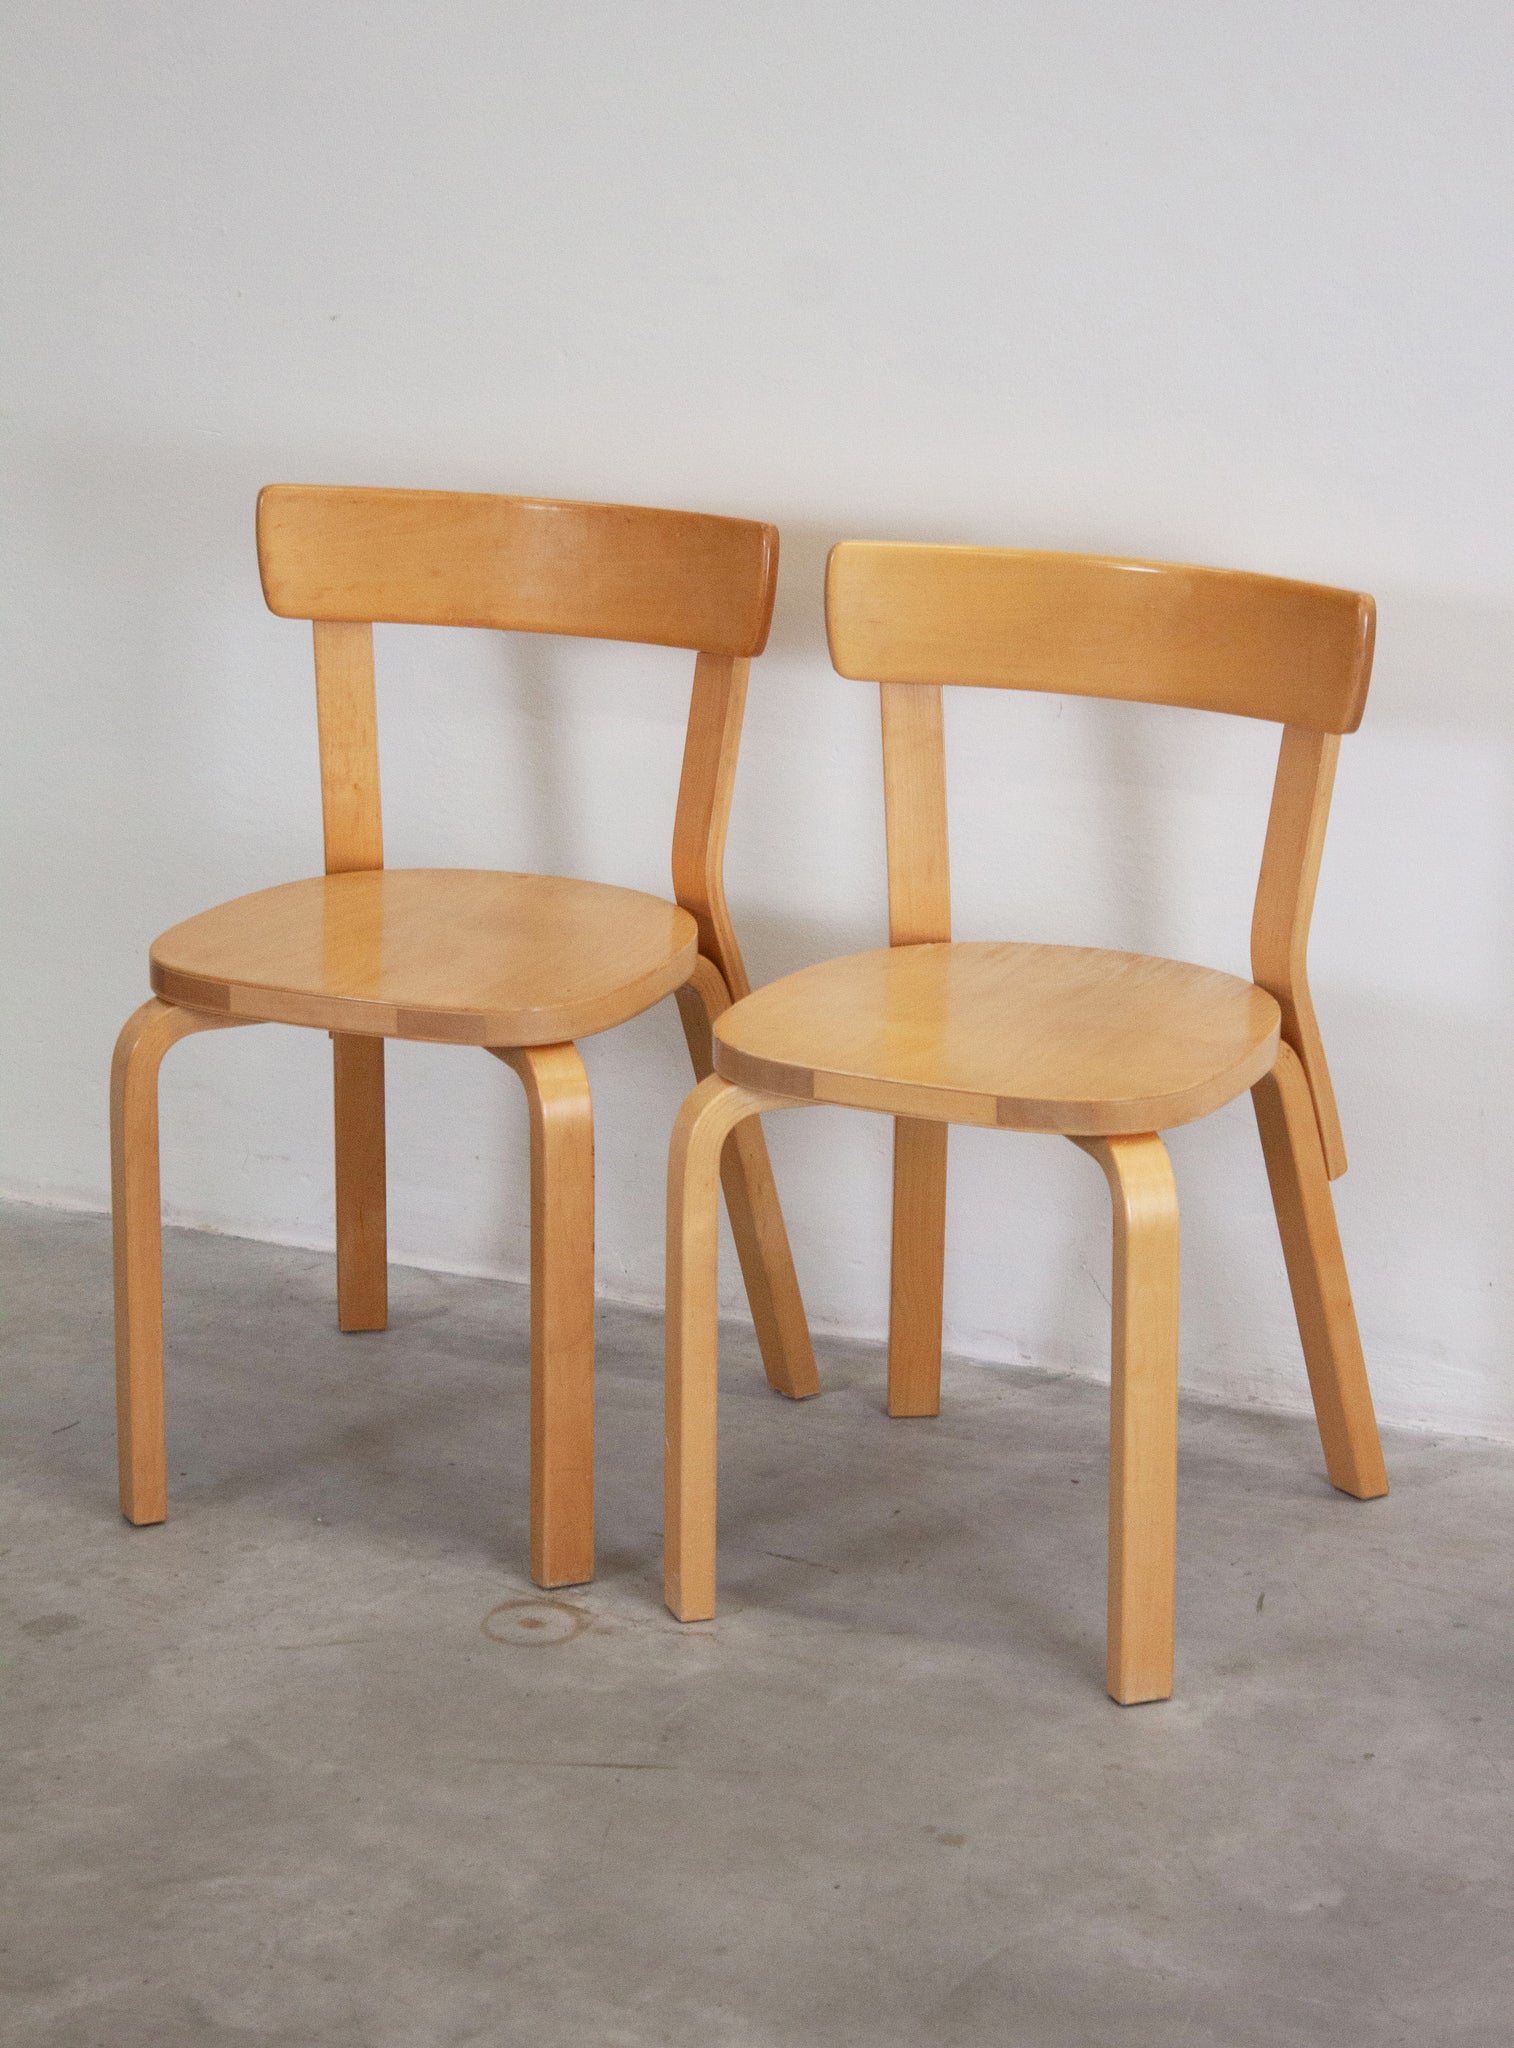 Artek Model 69 Chairs by Alvar Aalto (Birch)